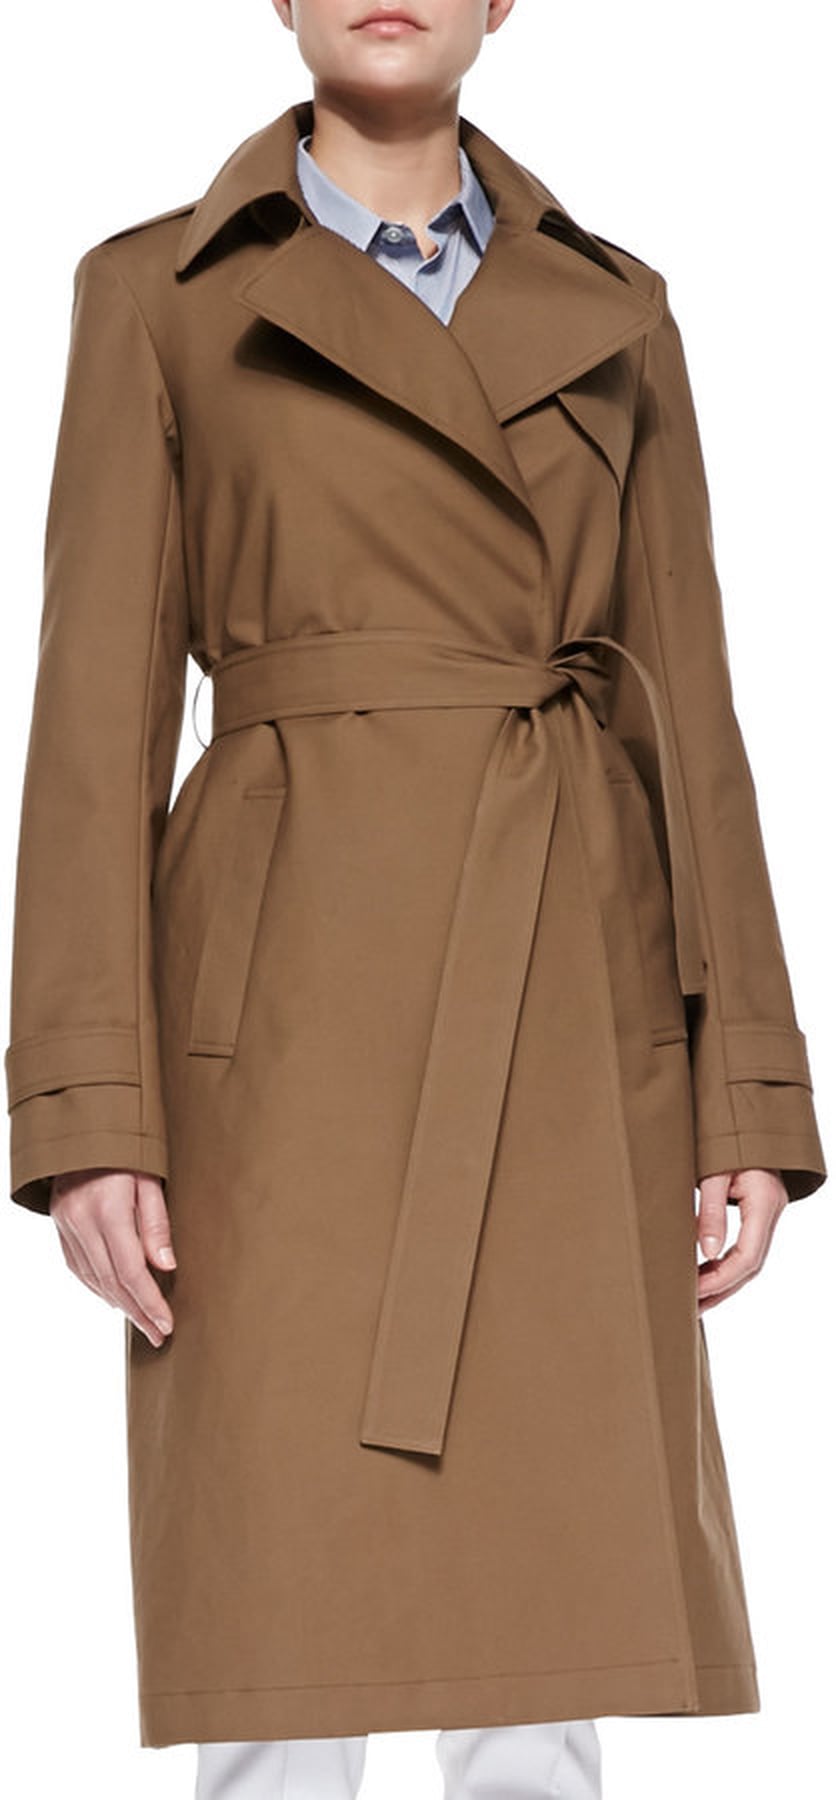 Fall Coat Trends 2014 | POPSUGAR Fashion